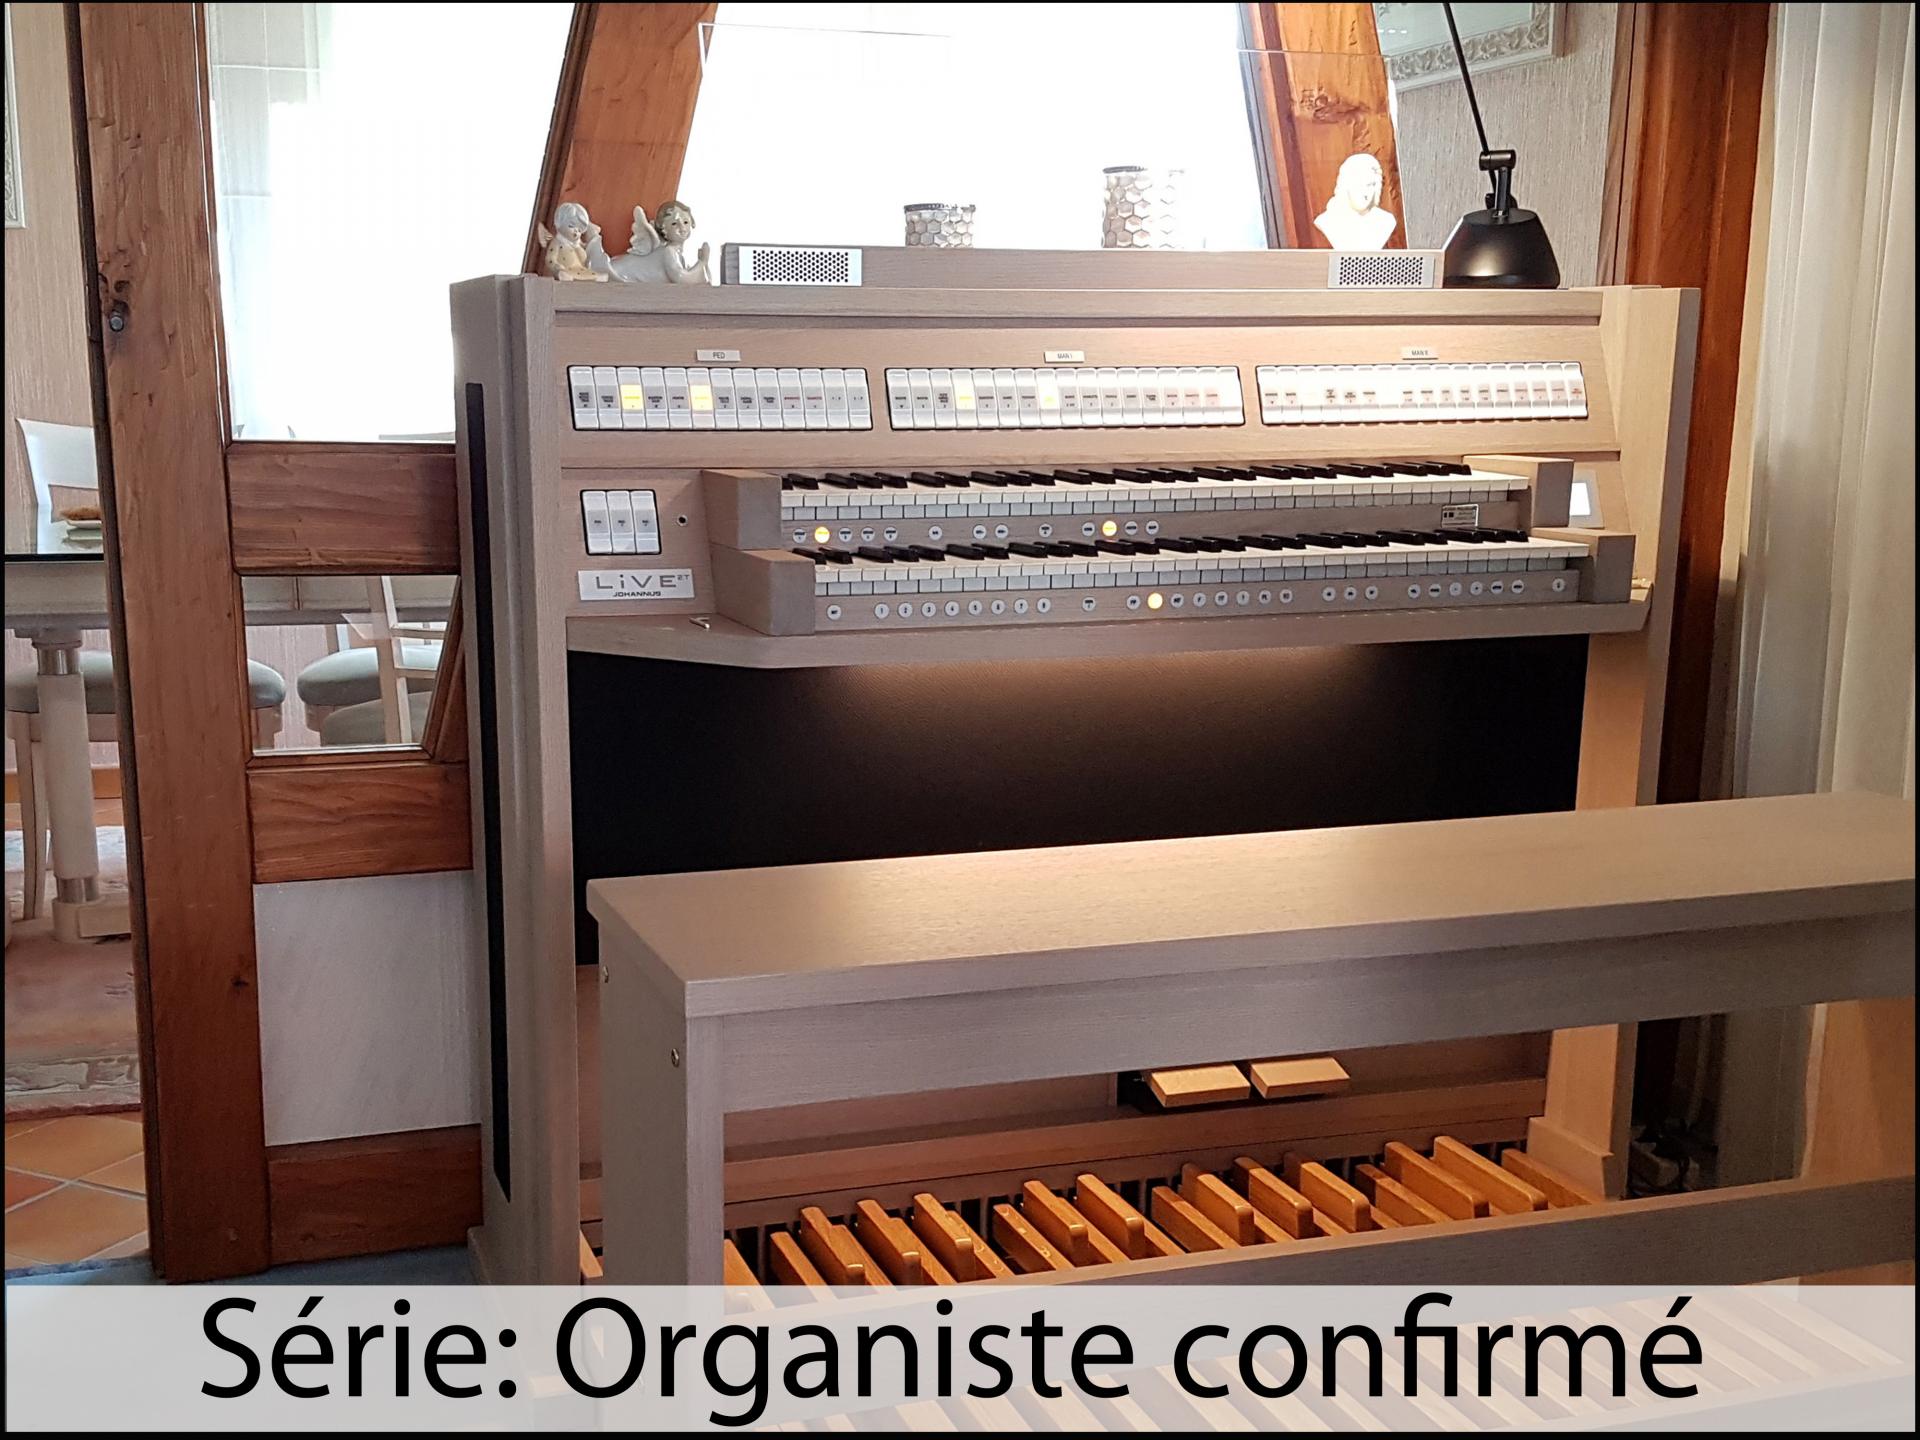 Carre organiste confirme 1